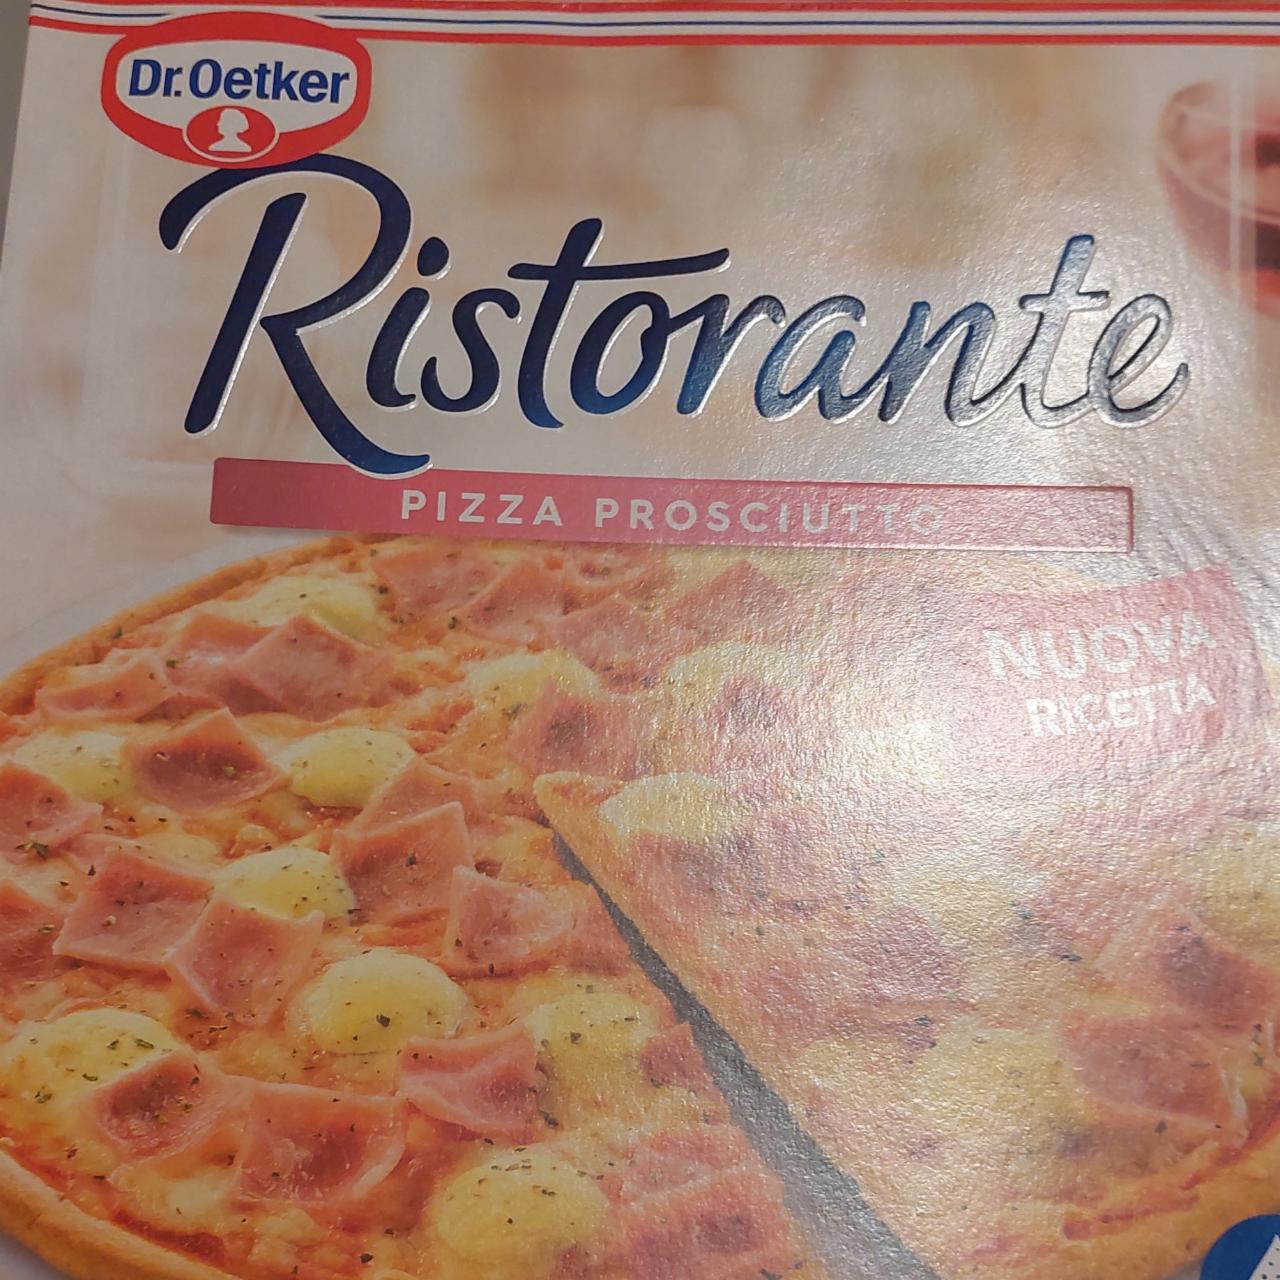 Képek - Ristorante pizza prosciutto Dr. Oetker